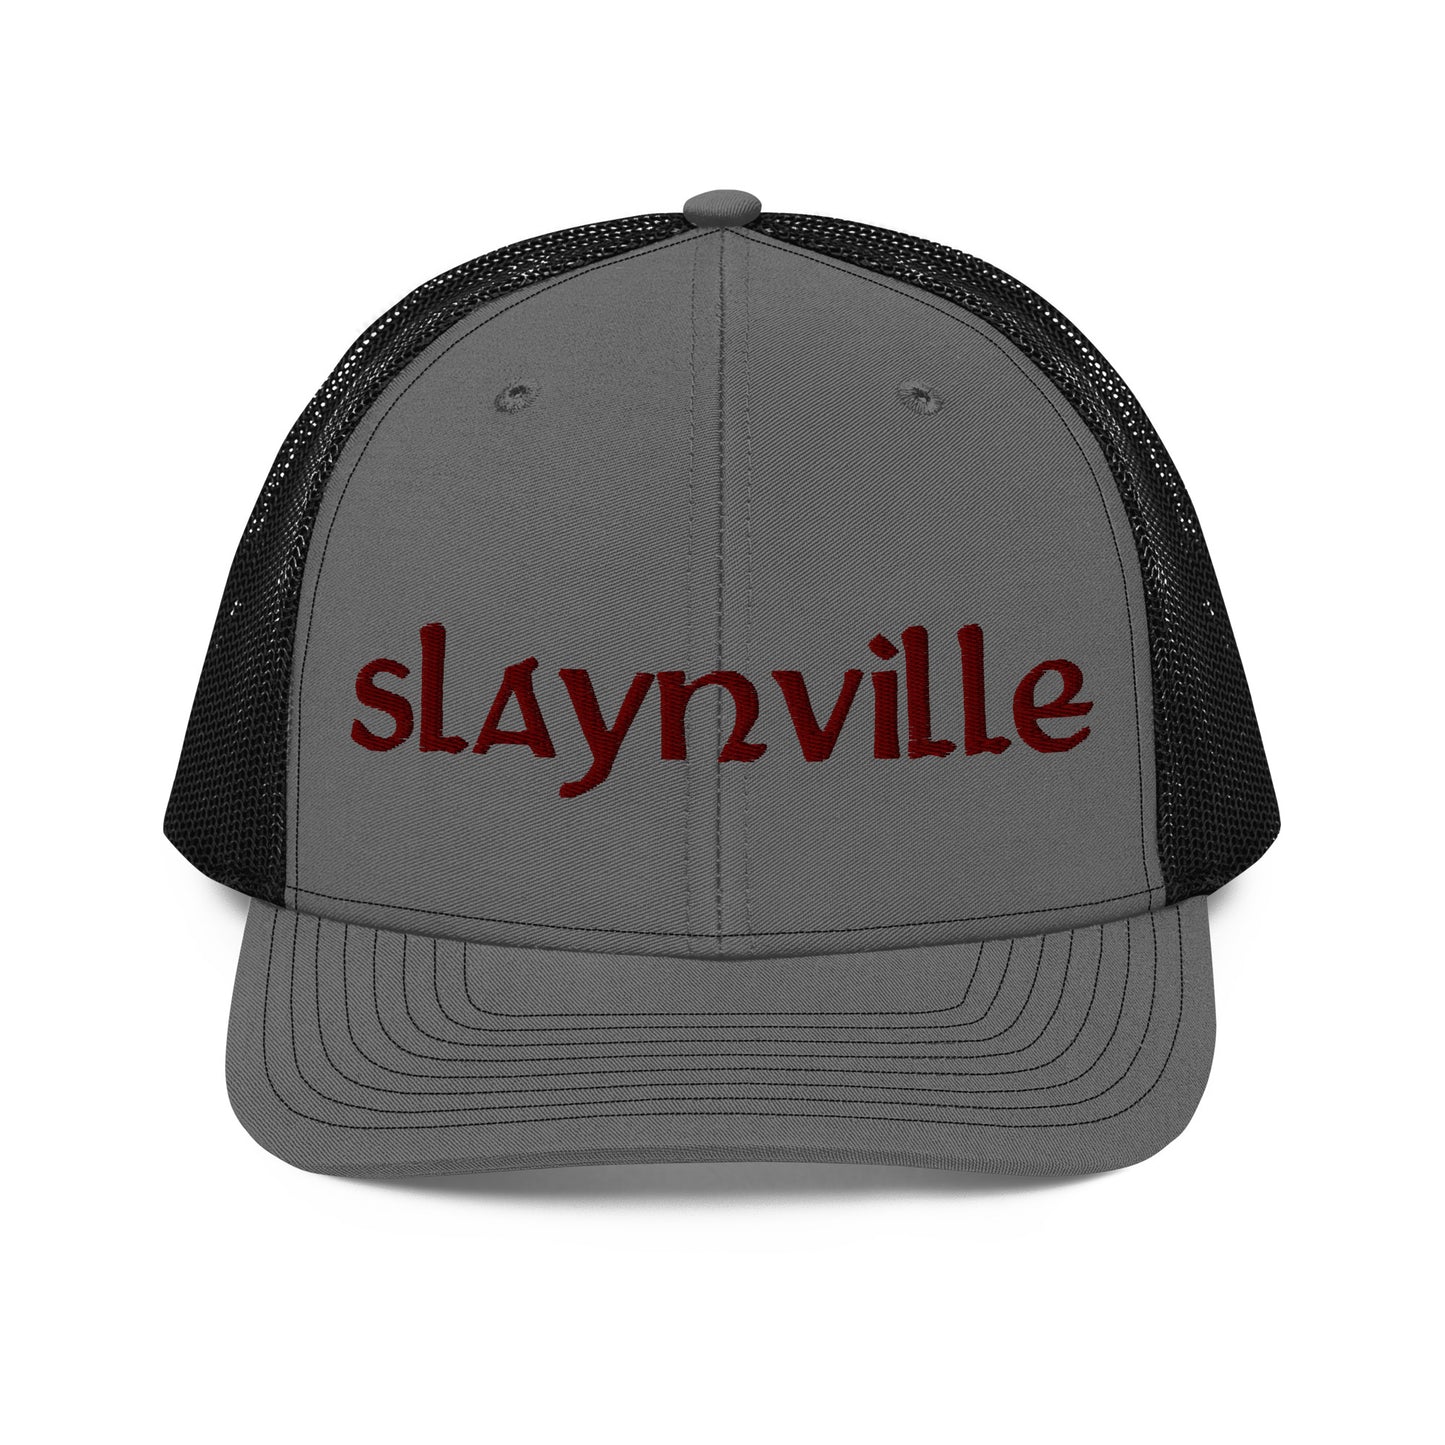 Slaynville Trucker Cap